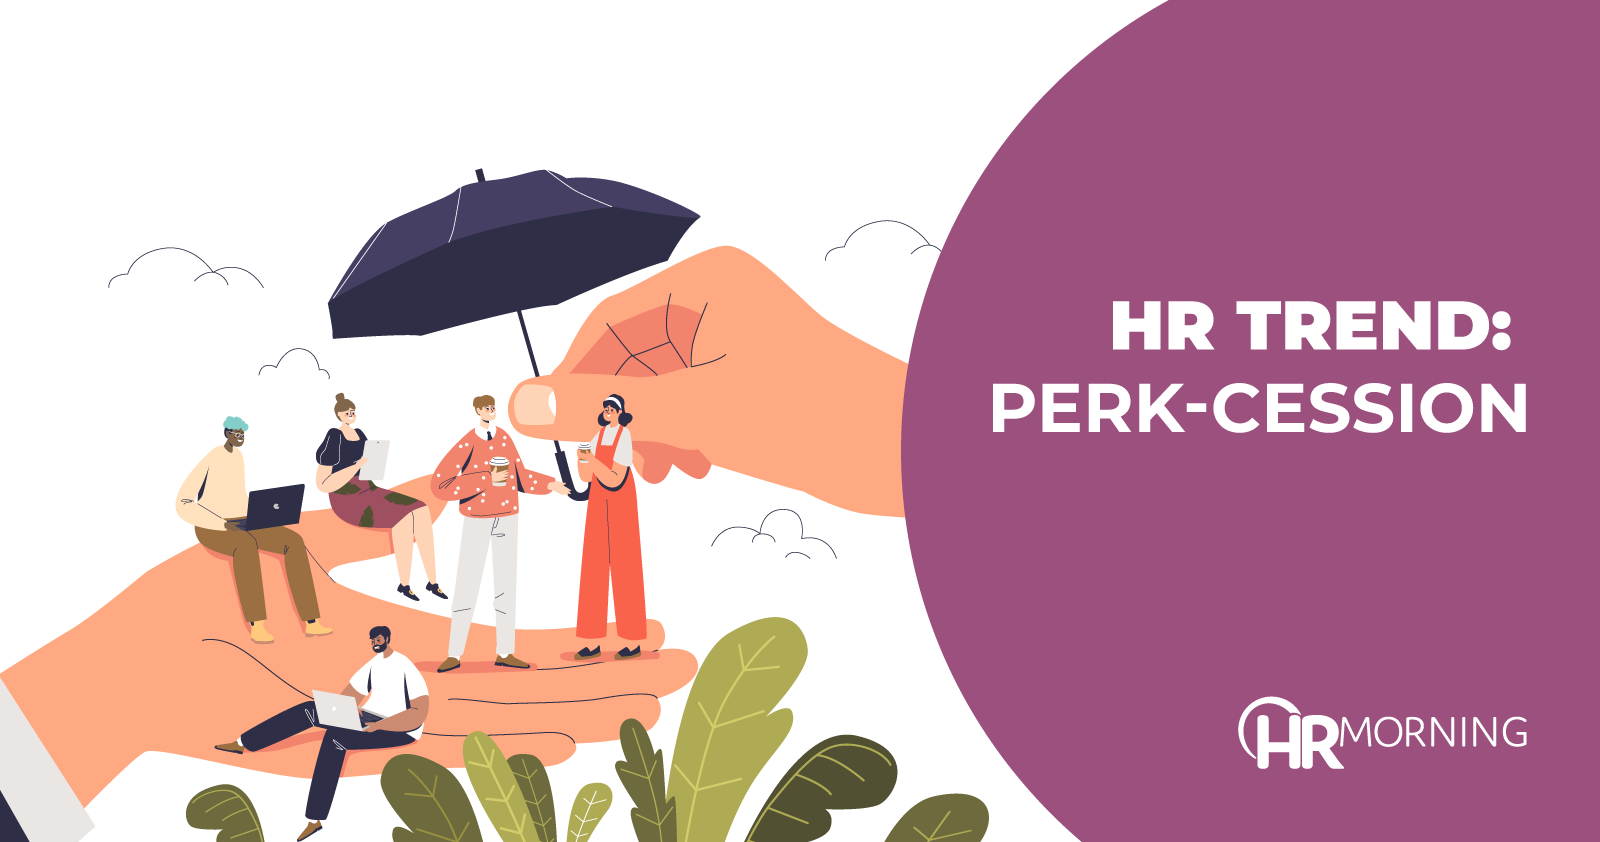 HR Trend: Perk-cession